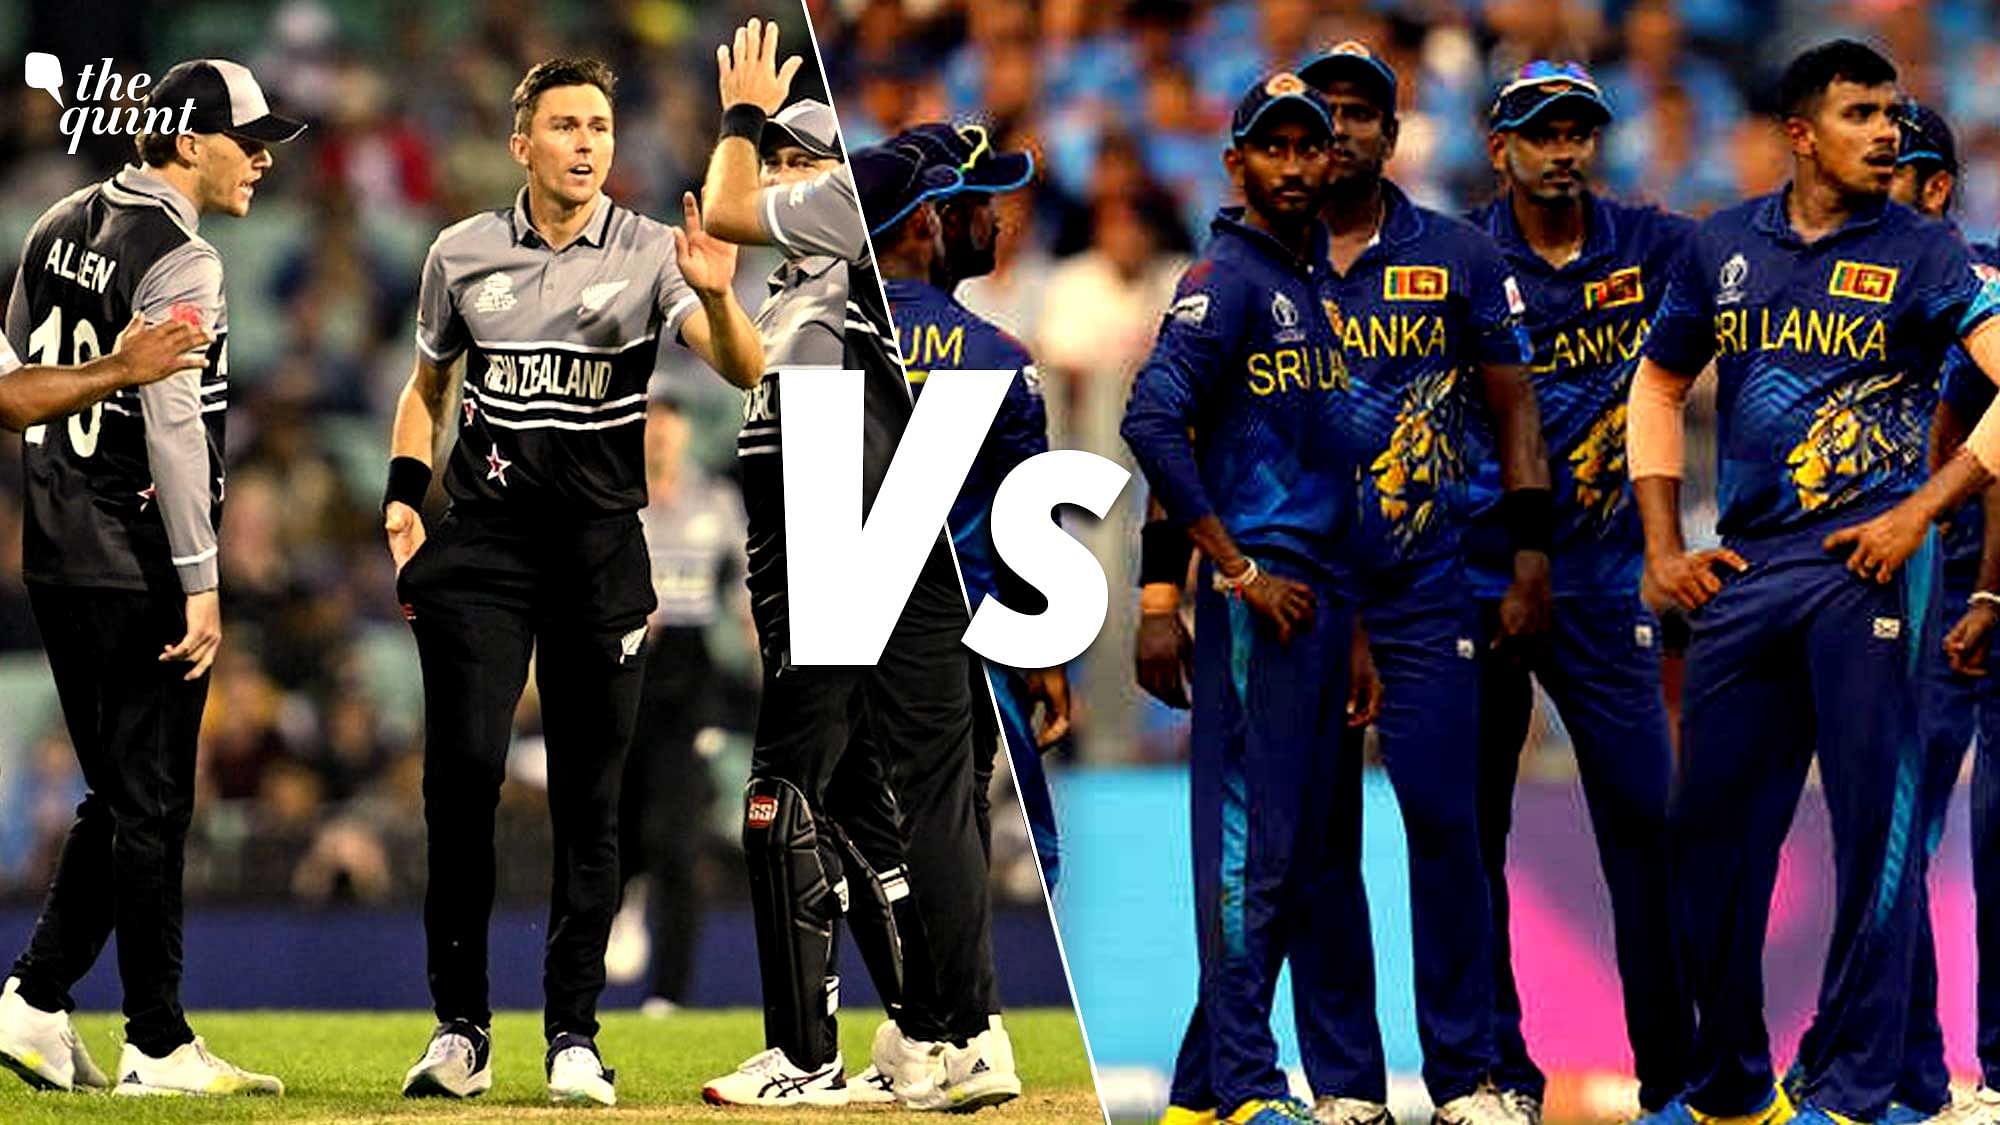 New Zealand vs Sri Lanka Live Streaming Where To Watch NZ vs SL World